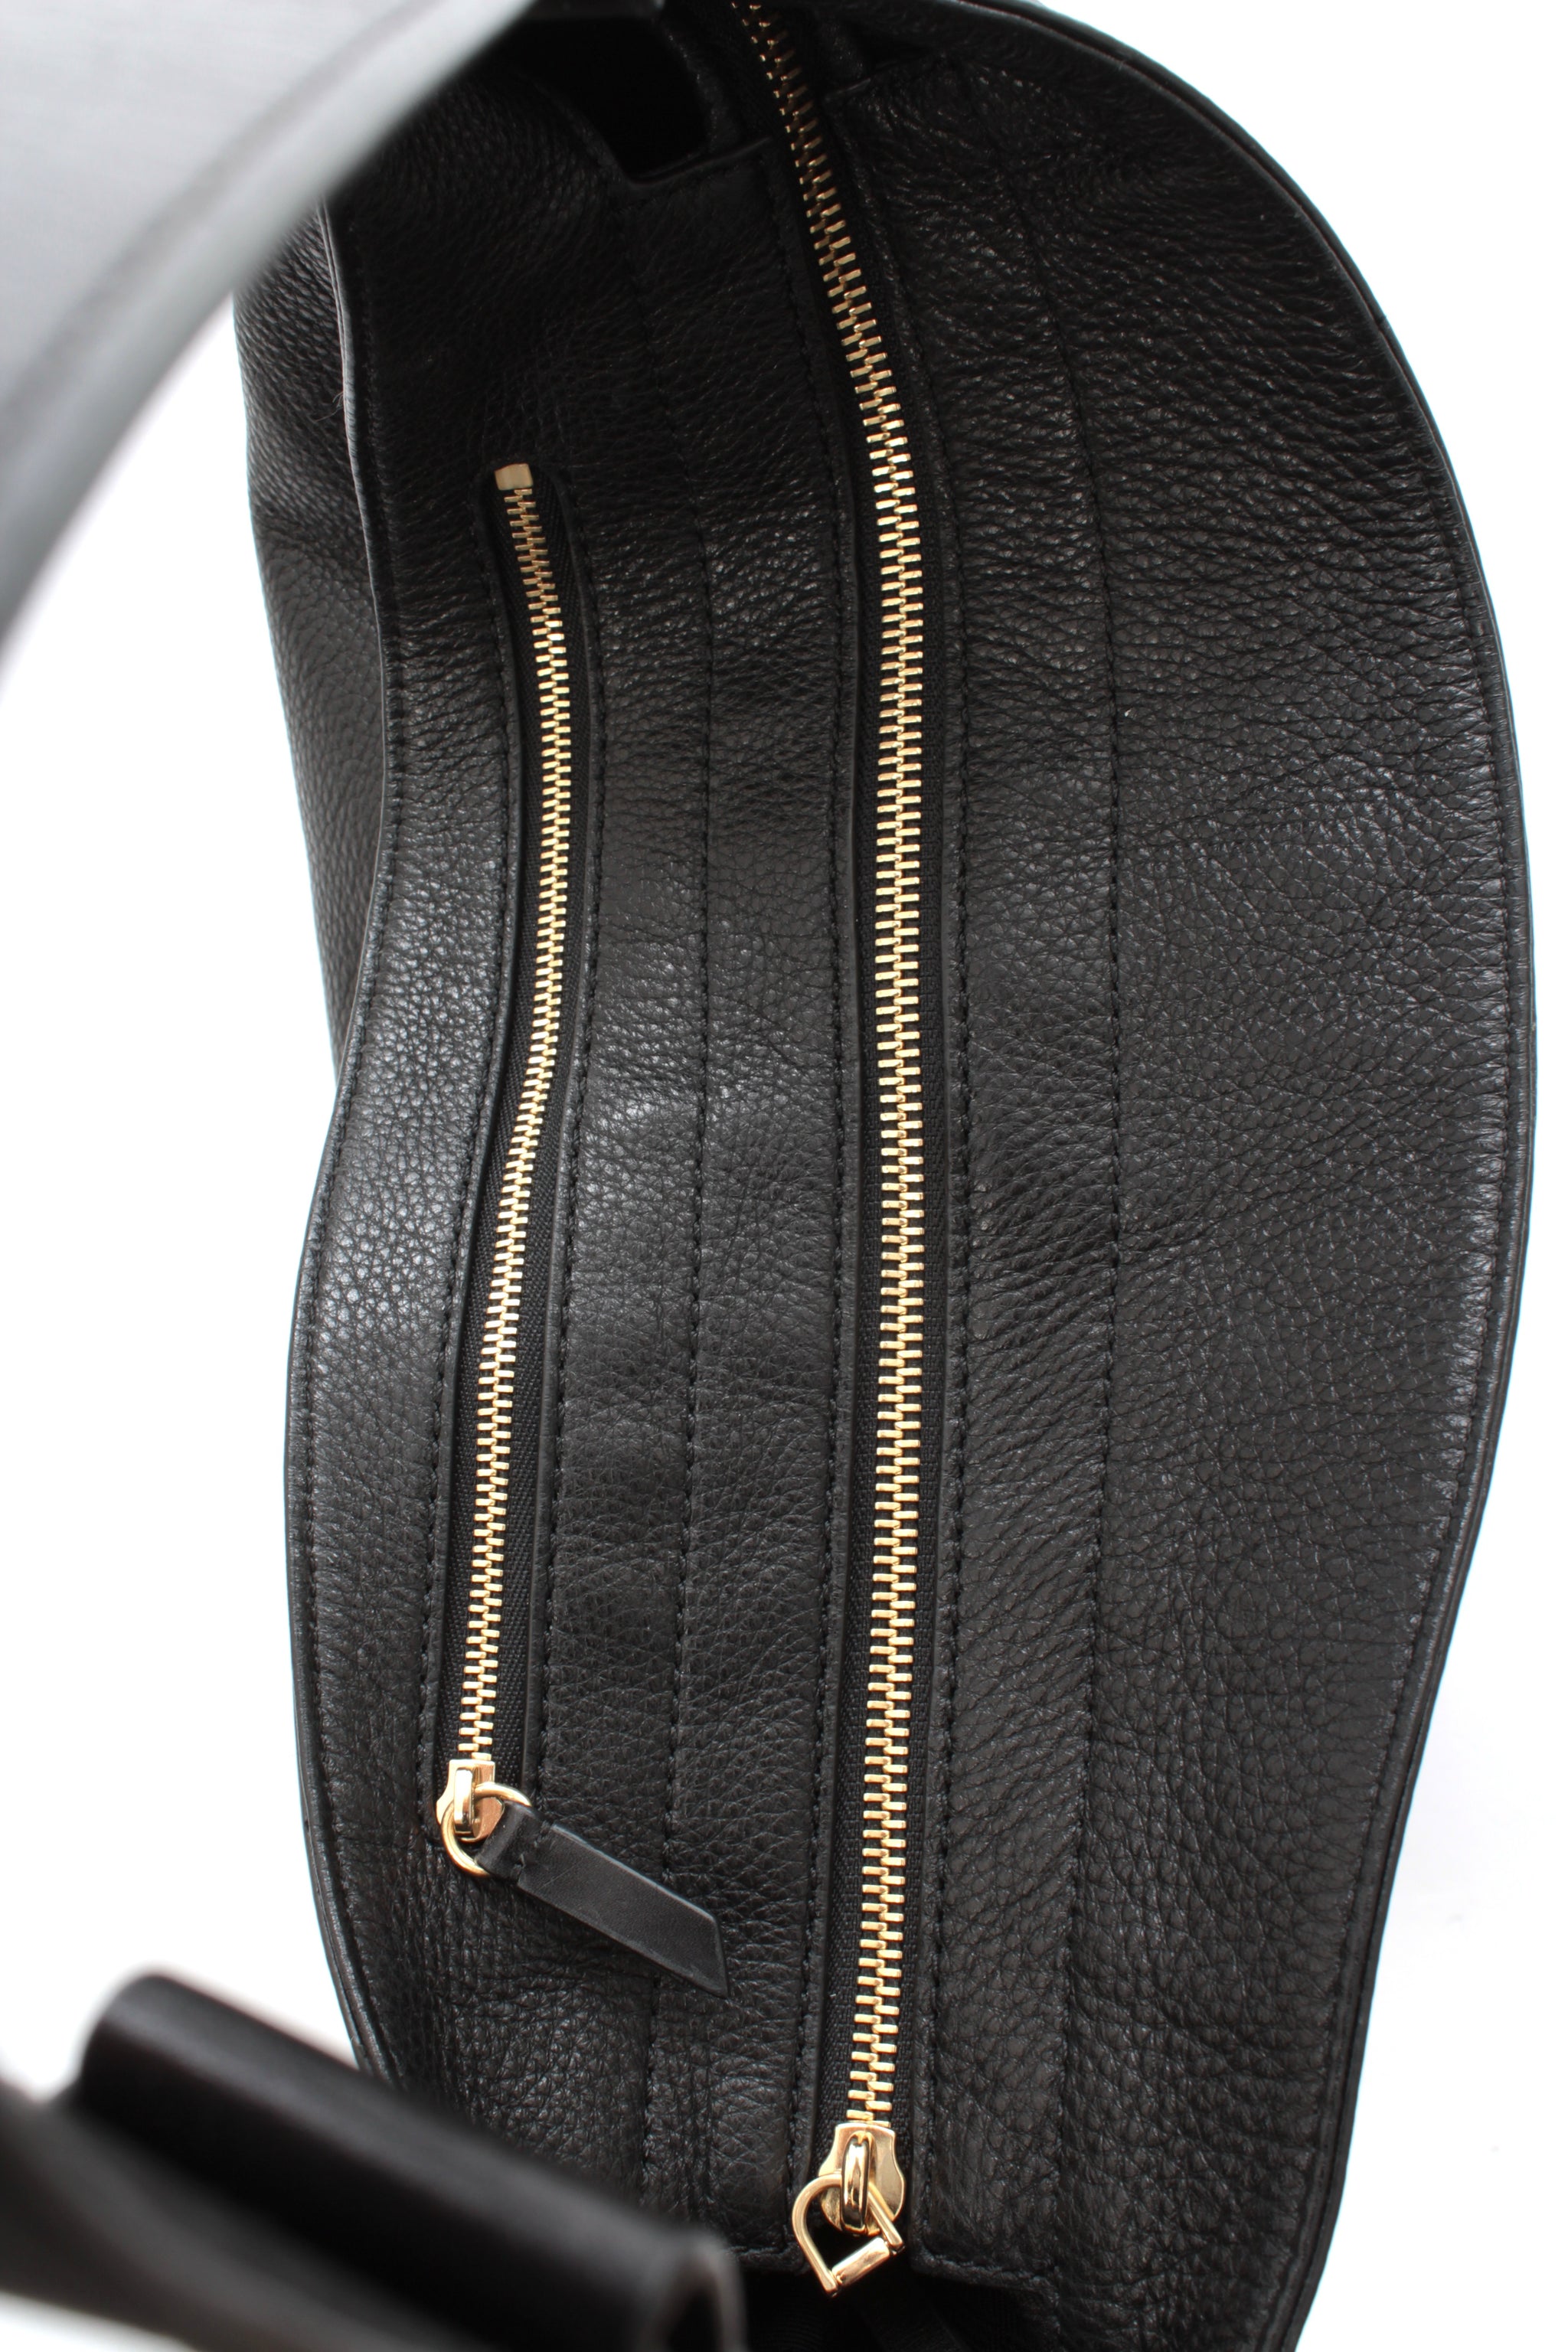 Michael Kors Leather Tassel Hobo Bag - Closet Upgrade